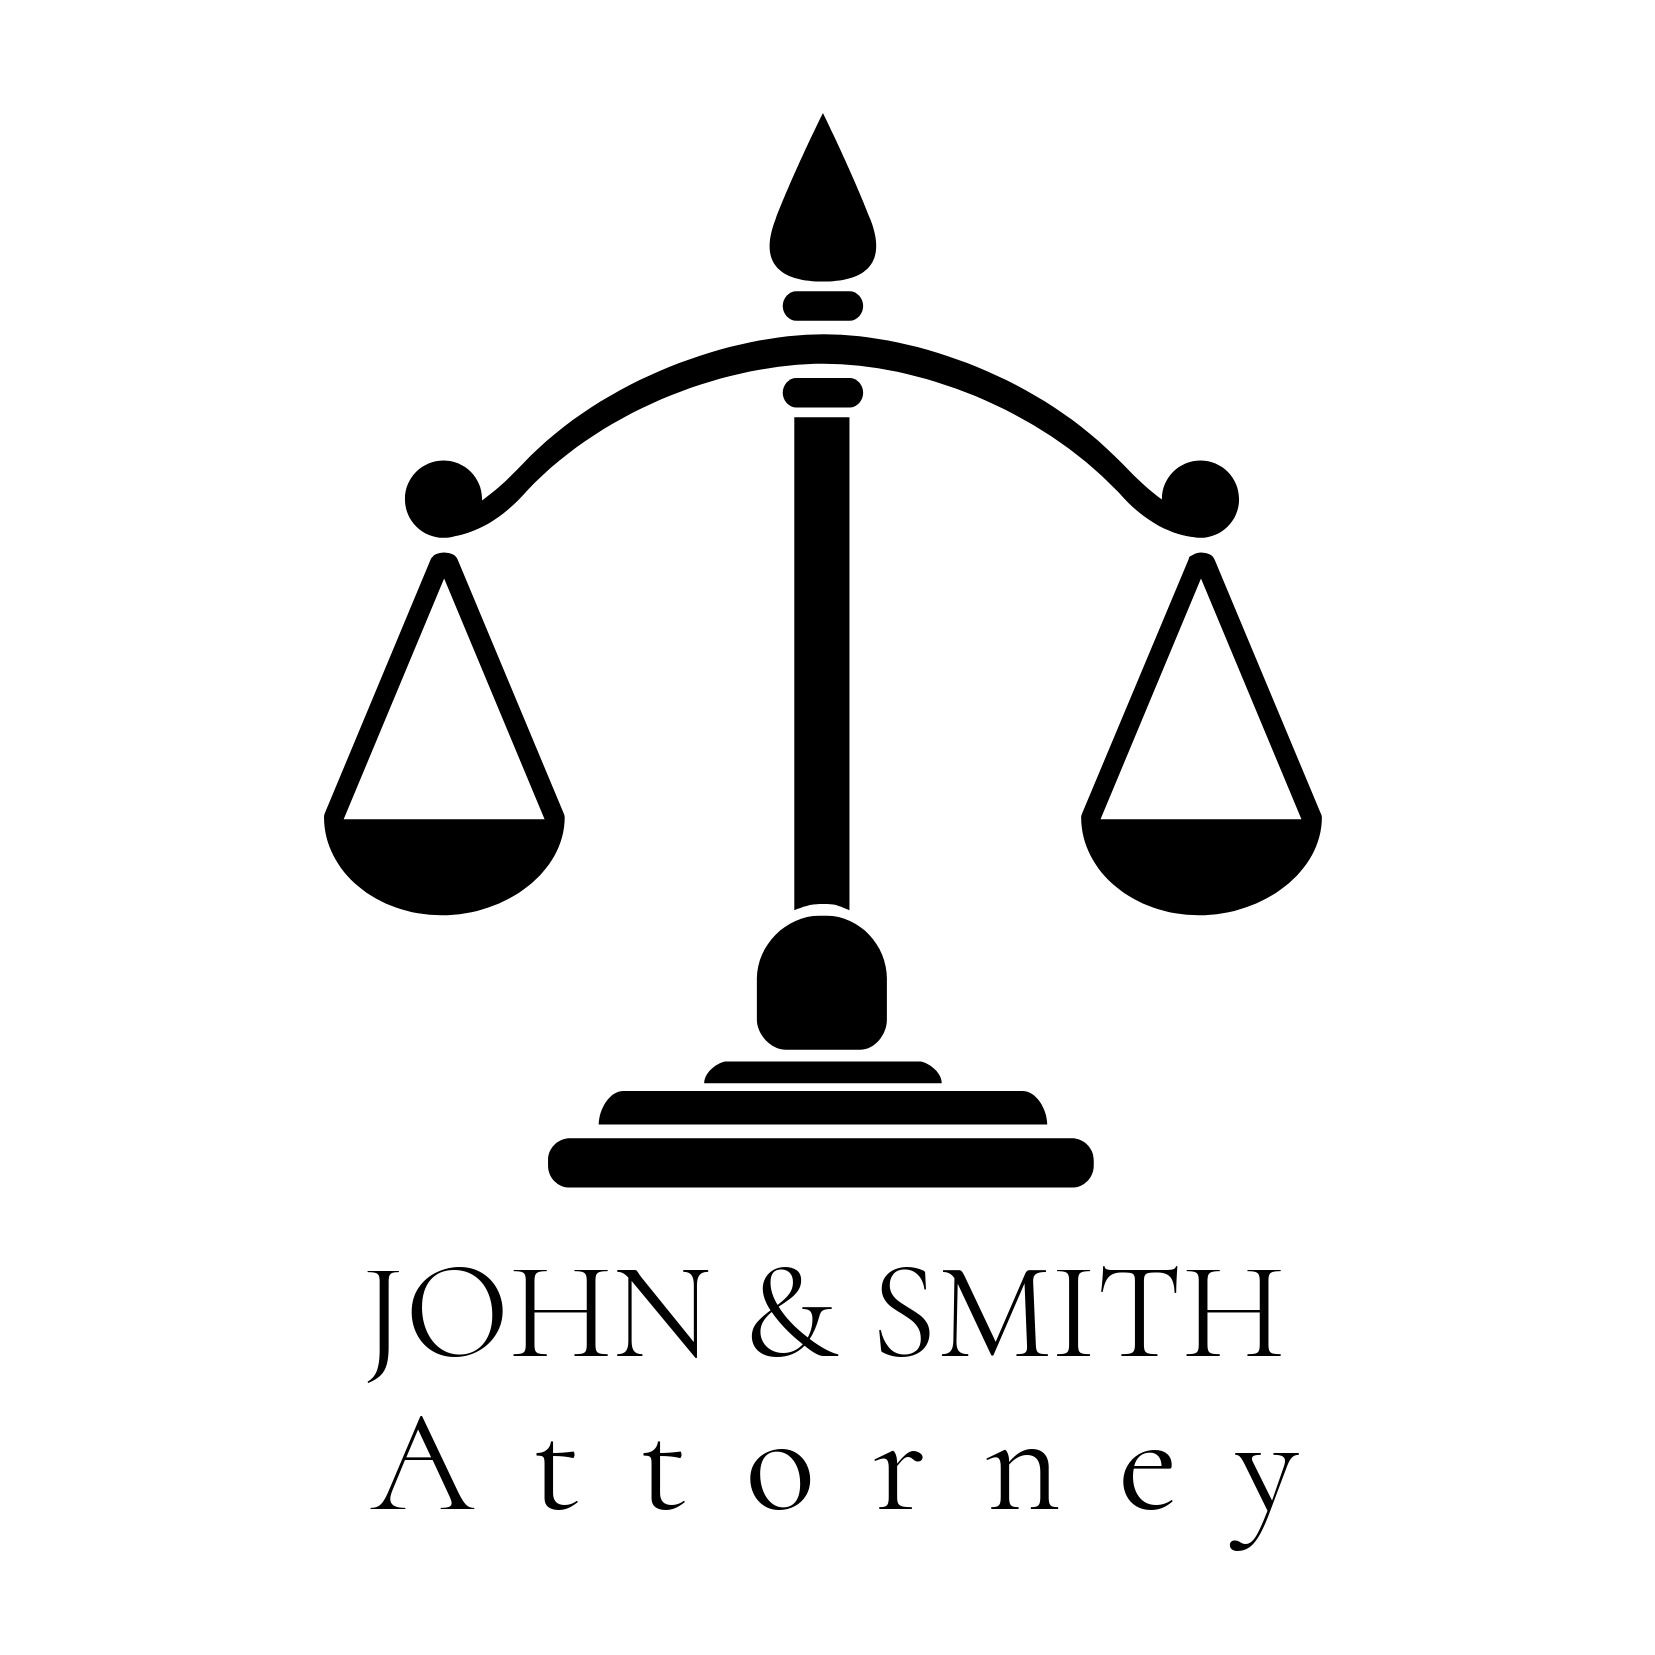 Attorney Creative Logo Designs - A step-by-step guide to creative logo design - Image